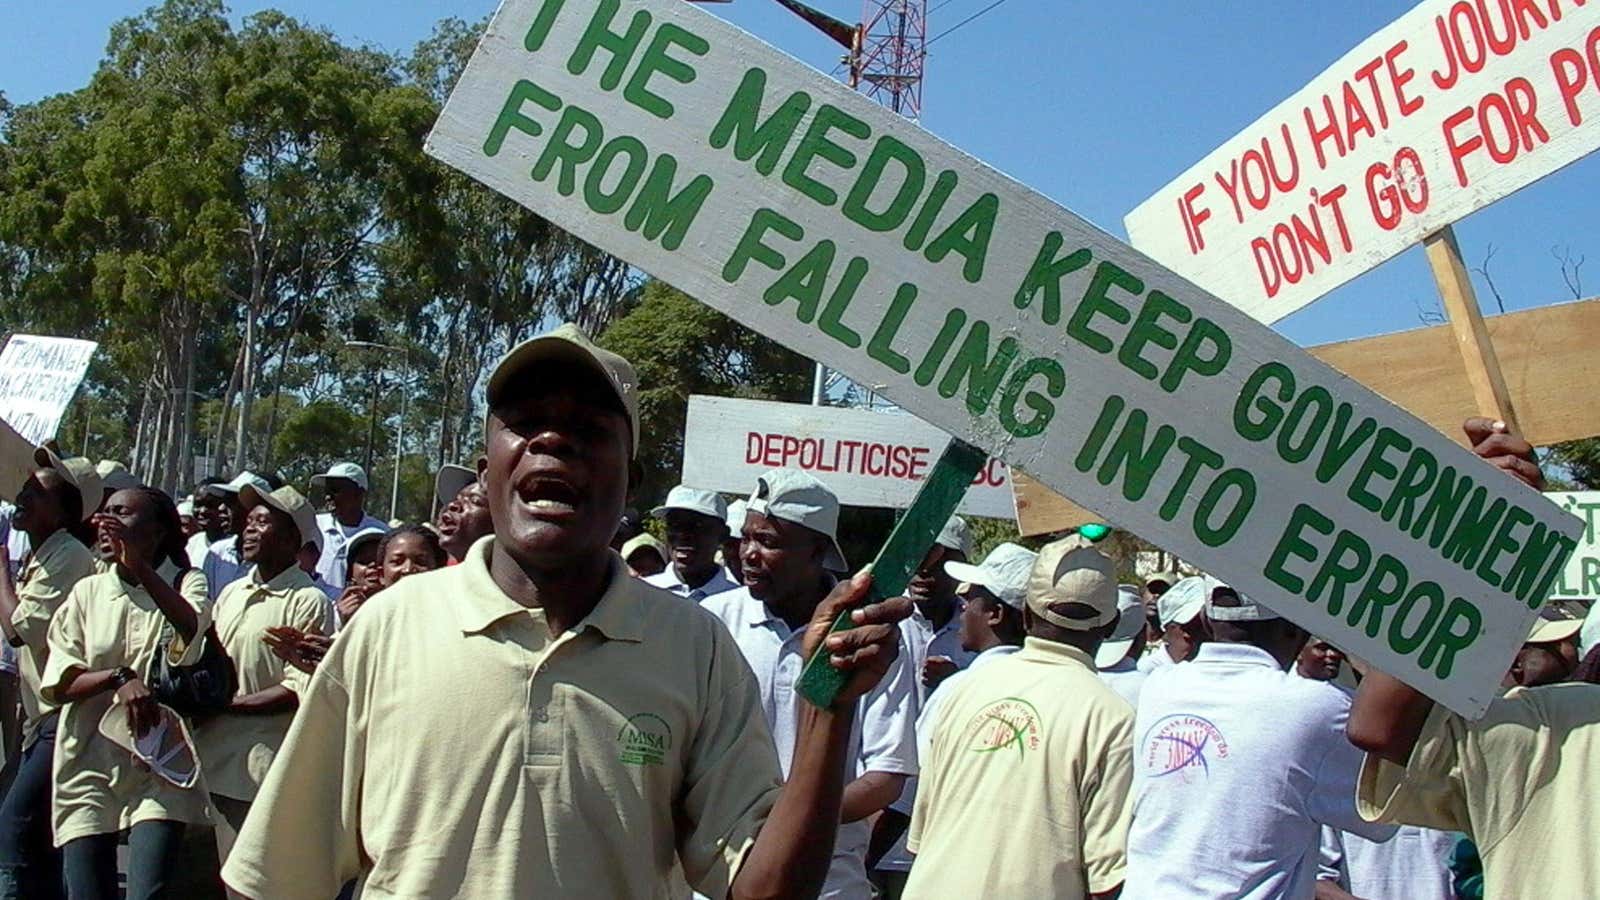 ‘We want a free press.’